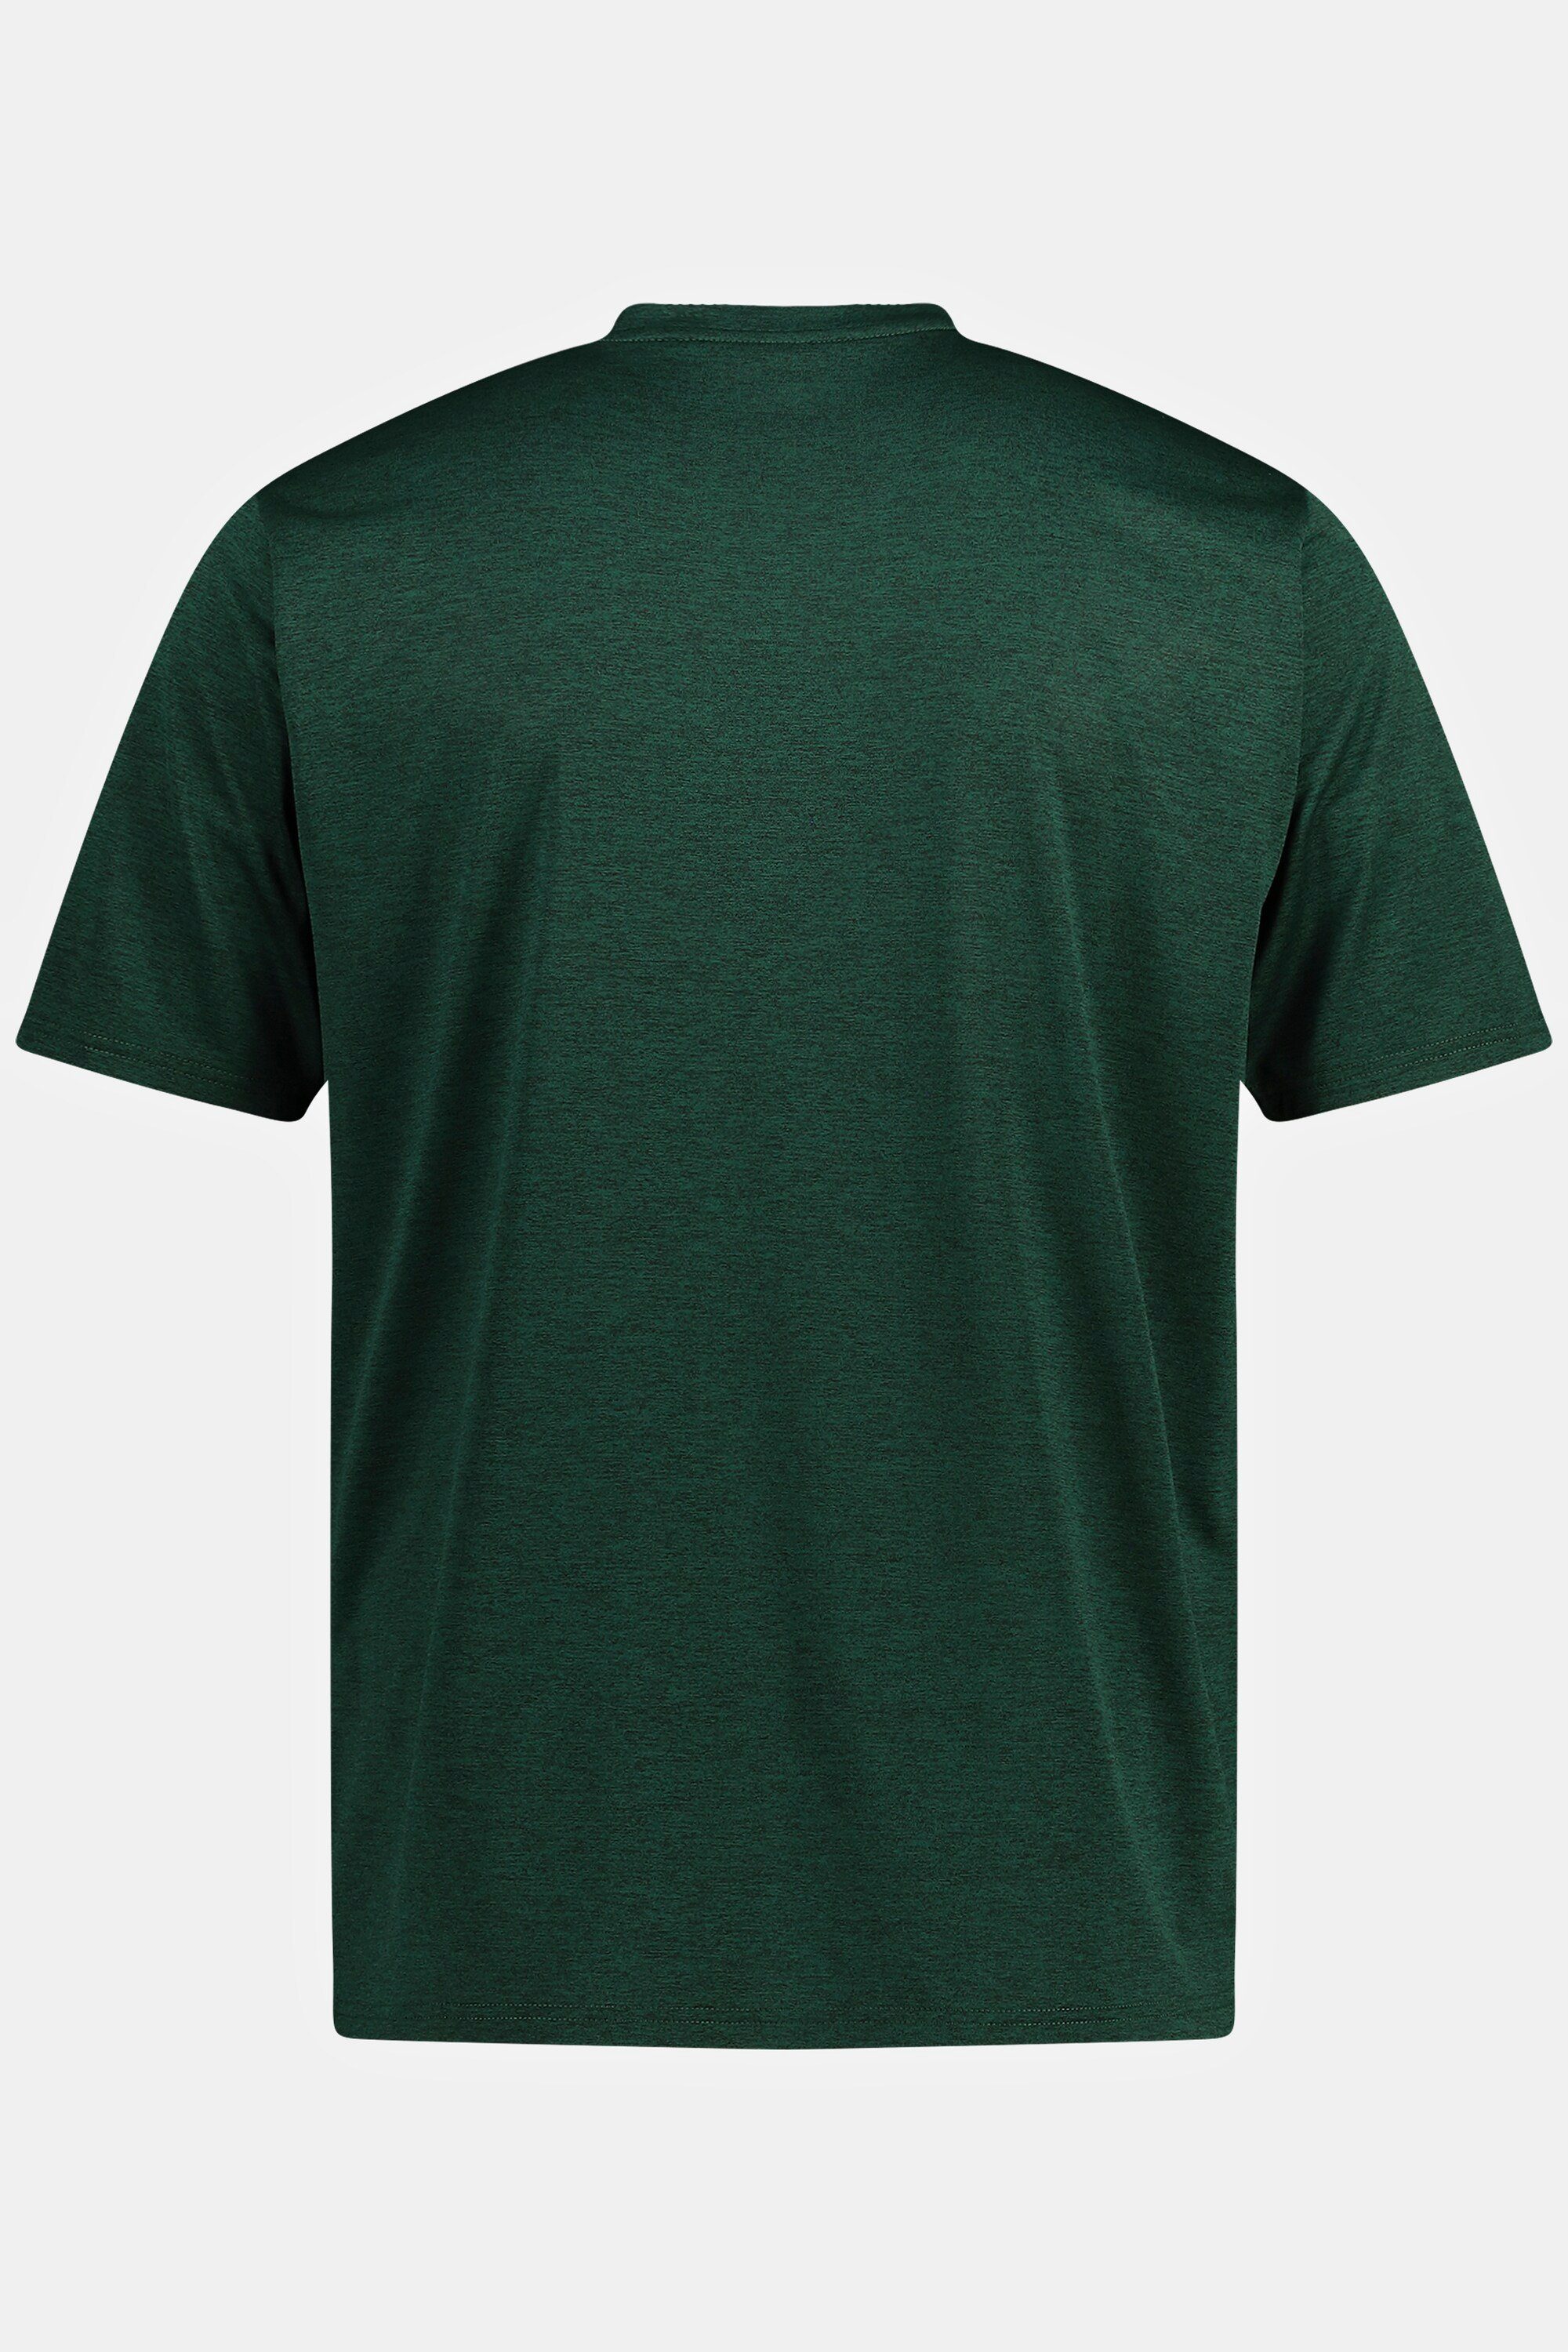 flaschengrün T-Shirt QuickDry Funktions-Shirt JP1880 FLEXNAMIC® Halbarm